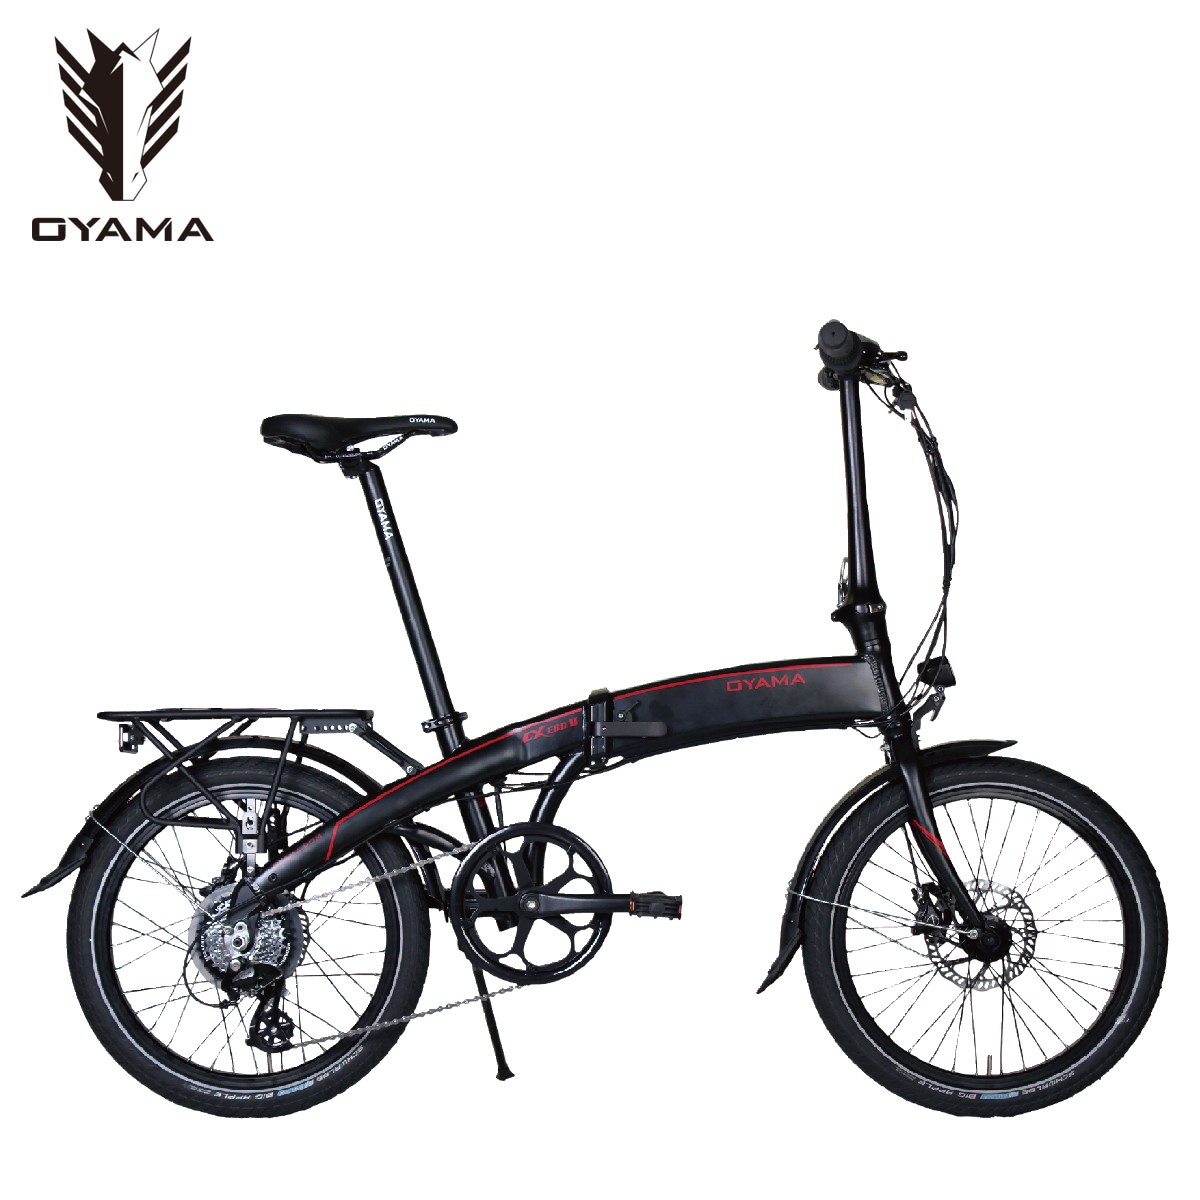 oyama mountain bike review